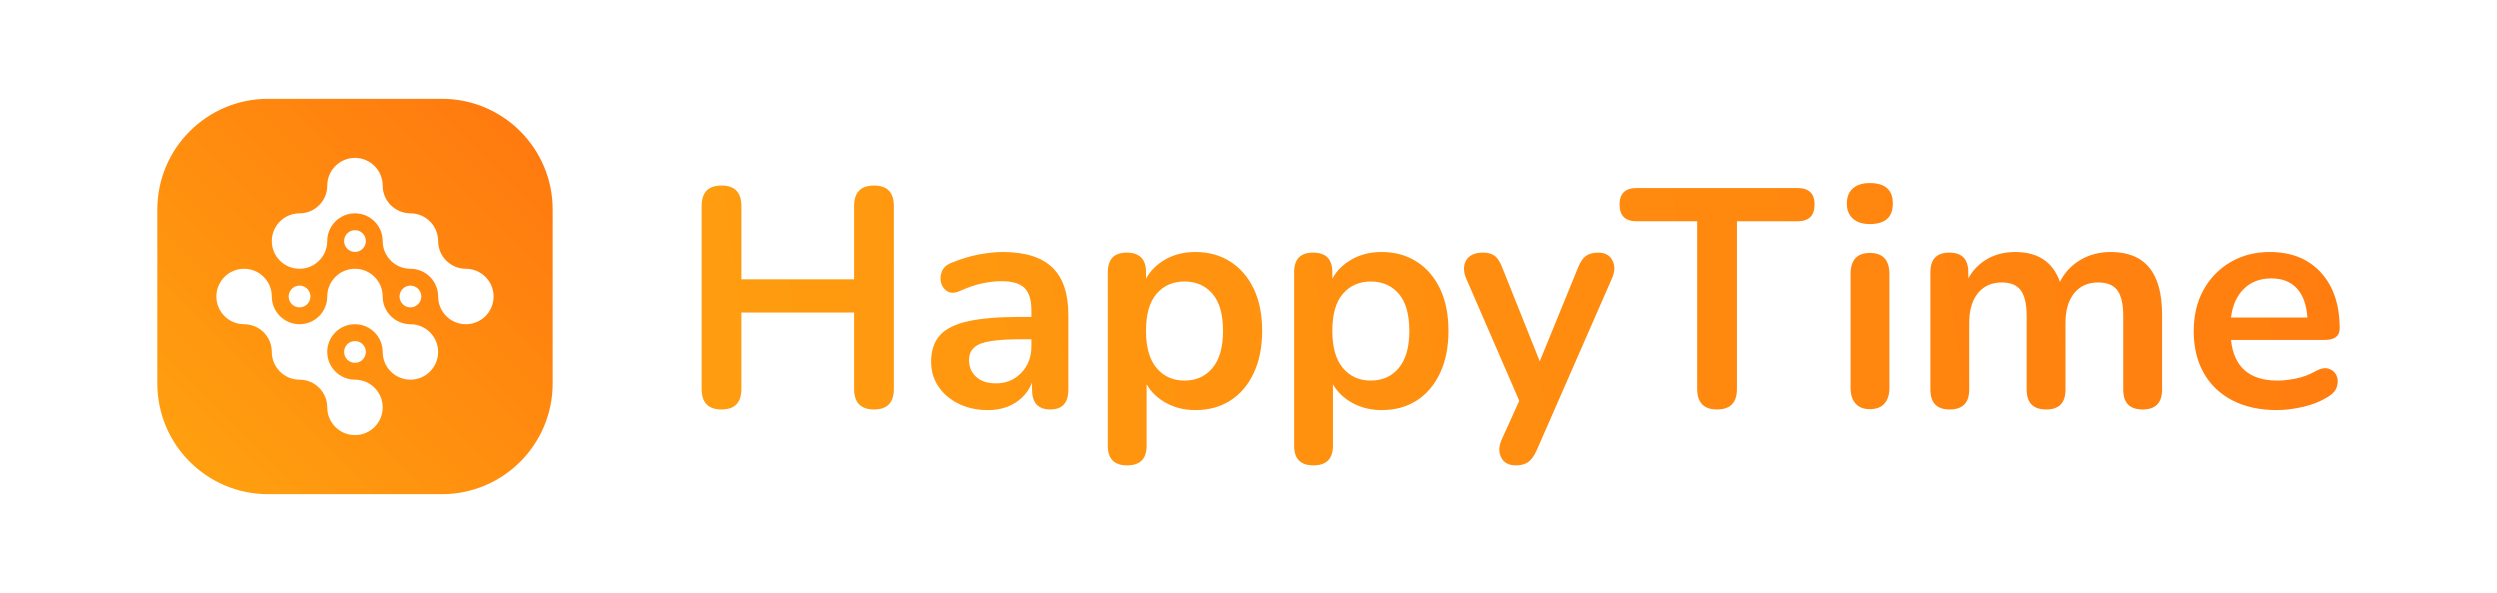 logo happytime